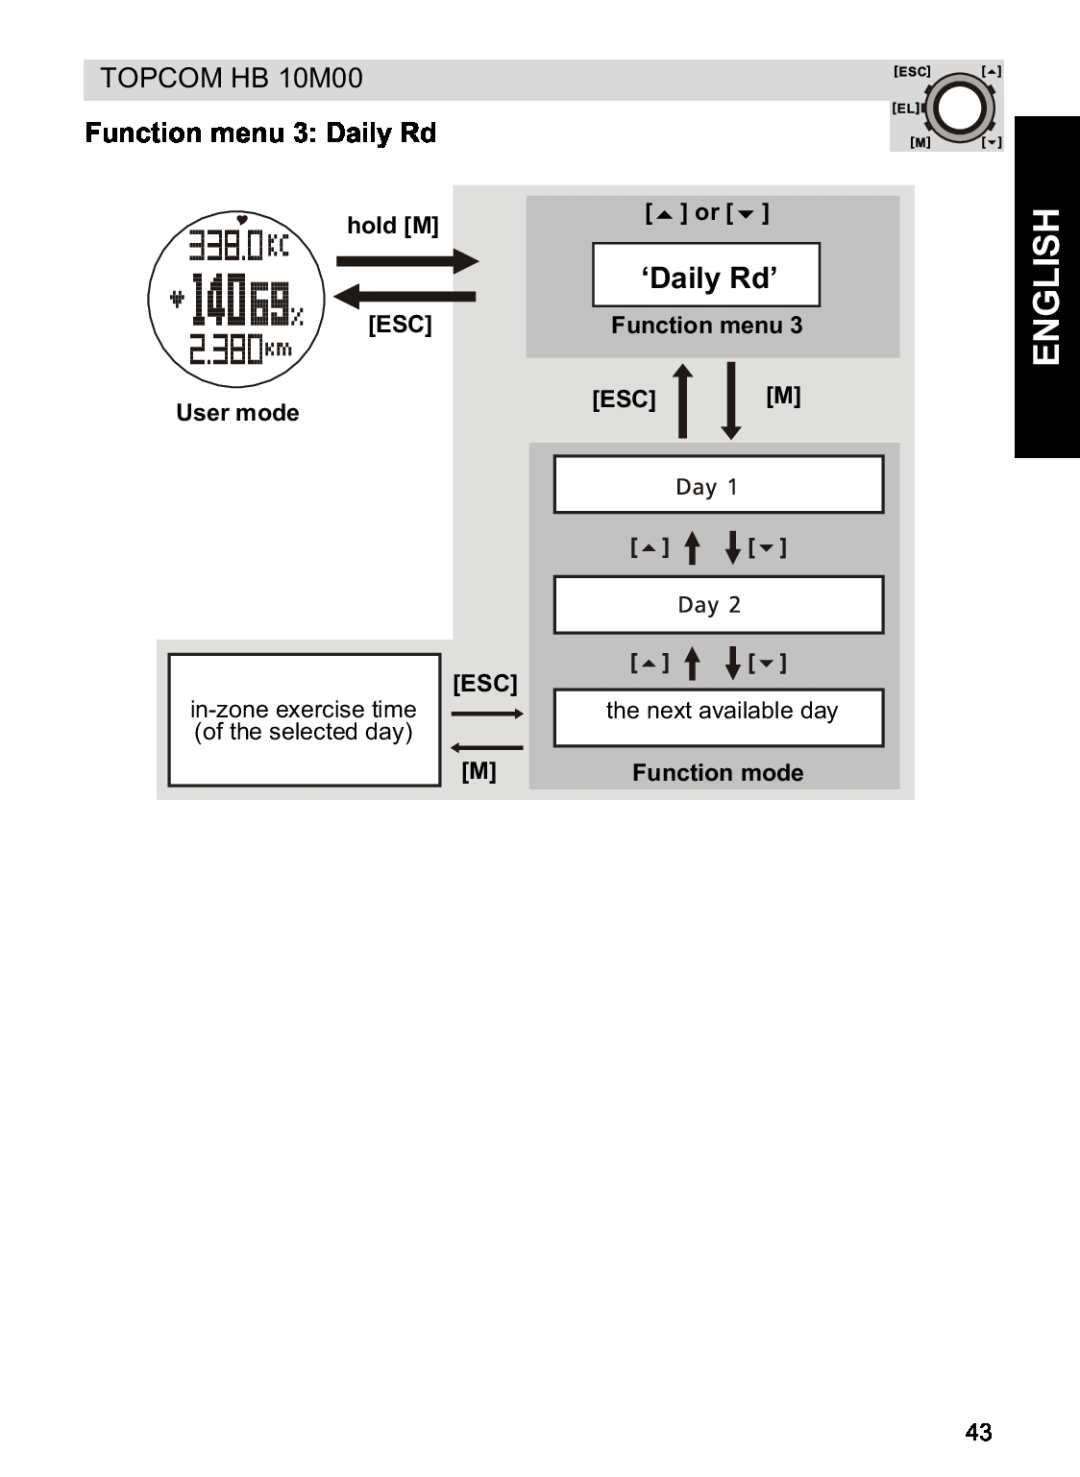 Topcom HB 10M00 manual English, ‘Daily Rd’, Function menu 3 Daily Rd 